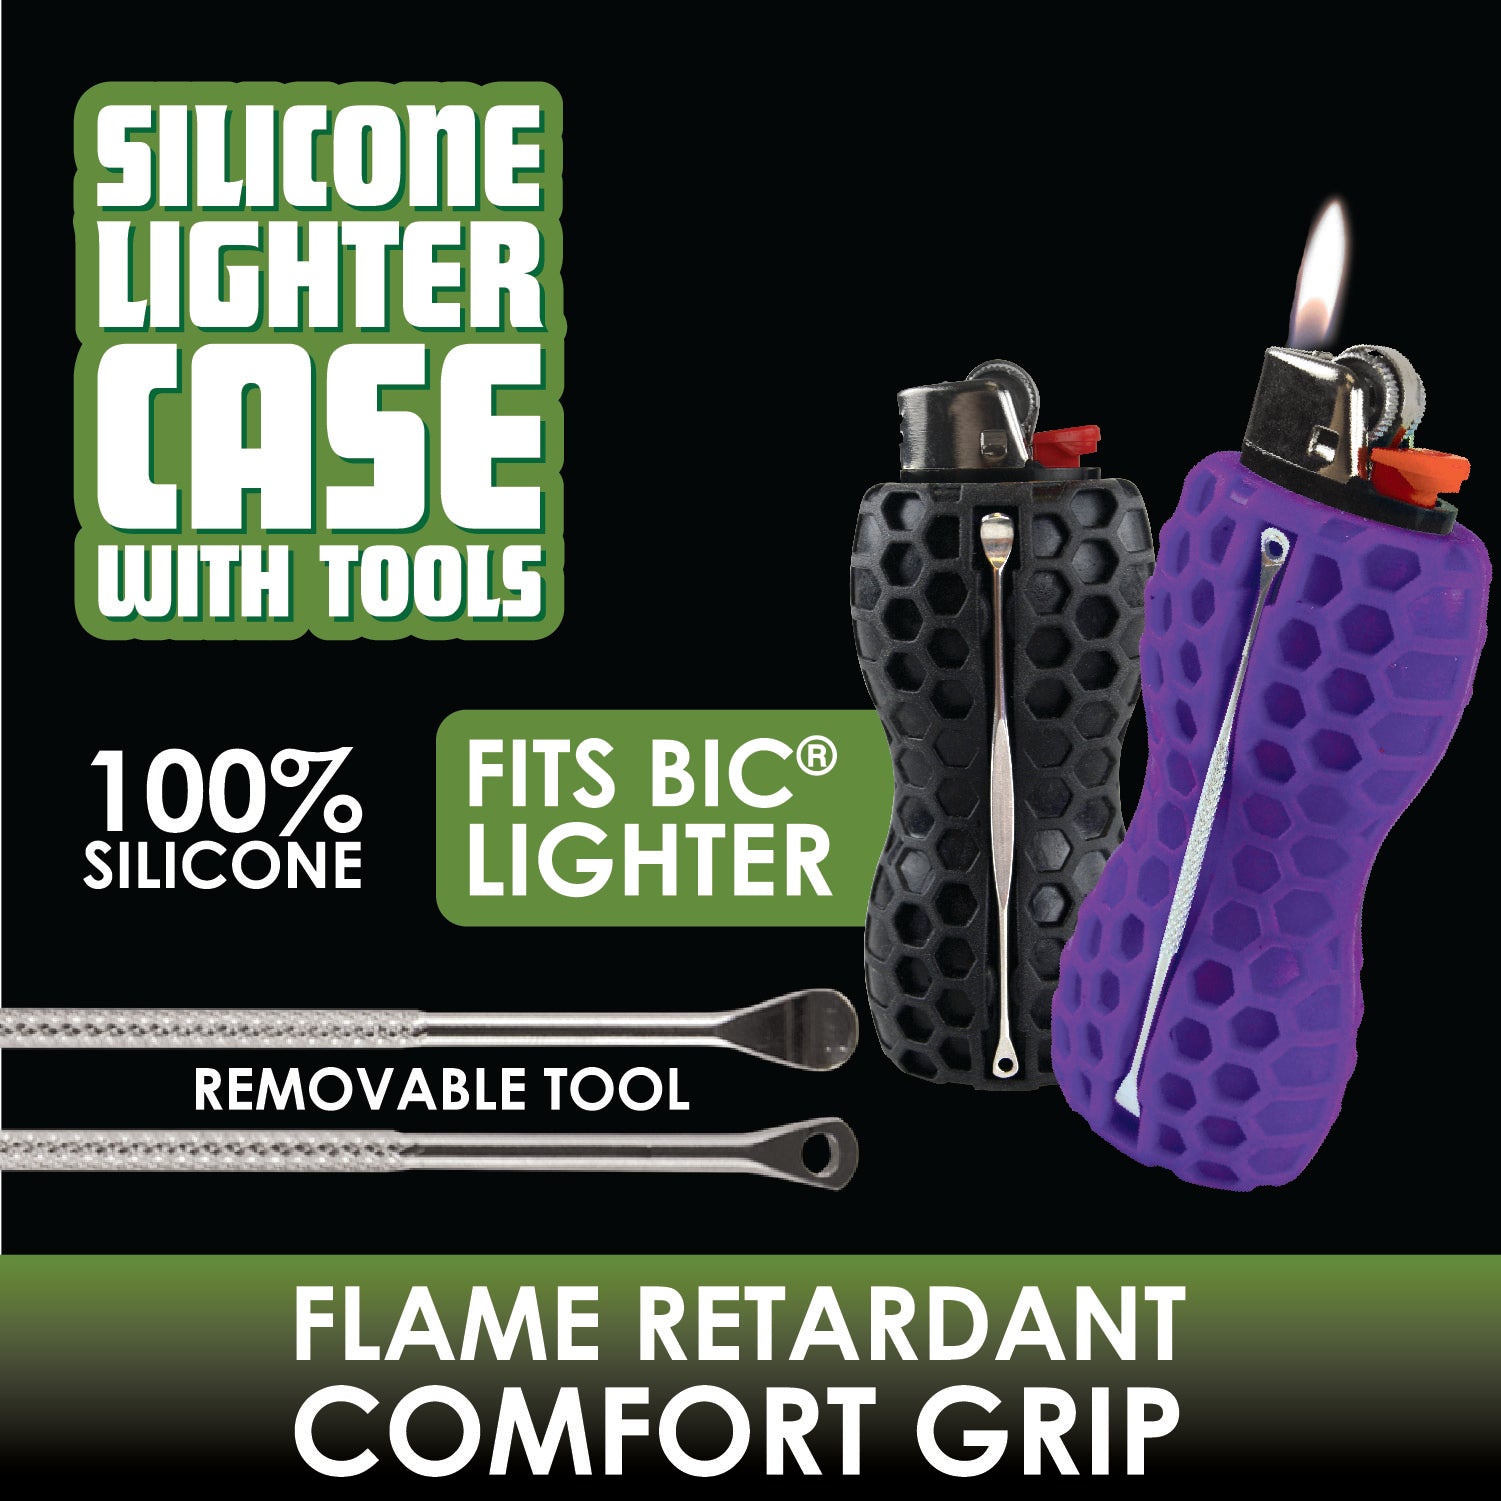 Mason Forge Metal Bic Lighter Case - Stylish Metal Lighter Holder - Li –  mason-forgeproducts